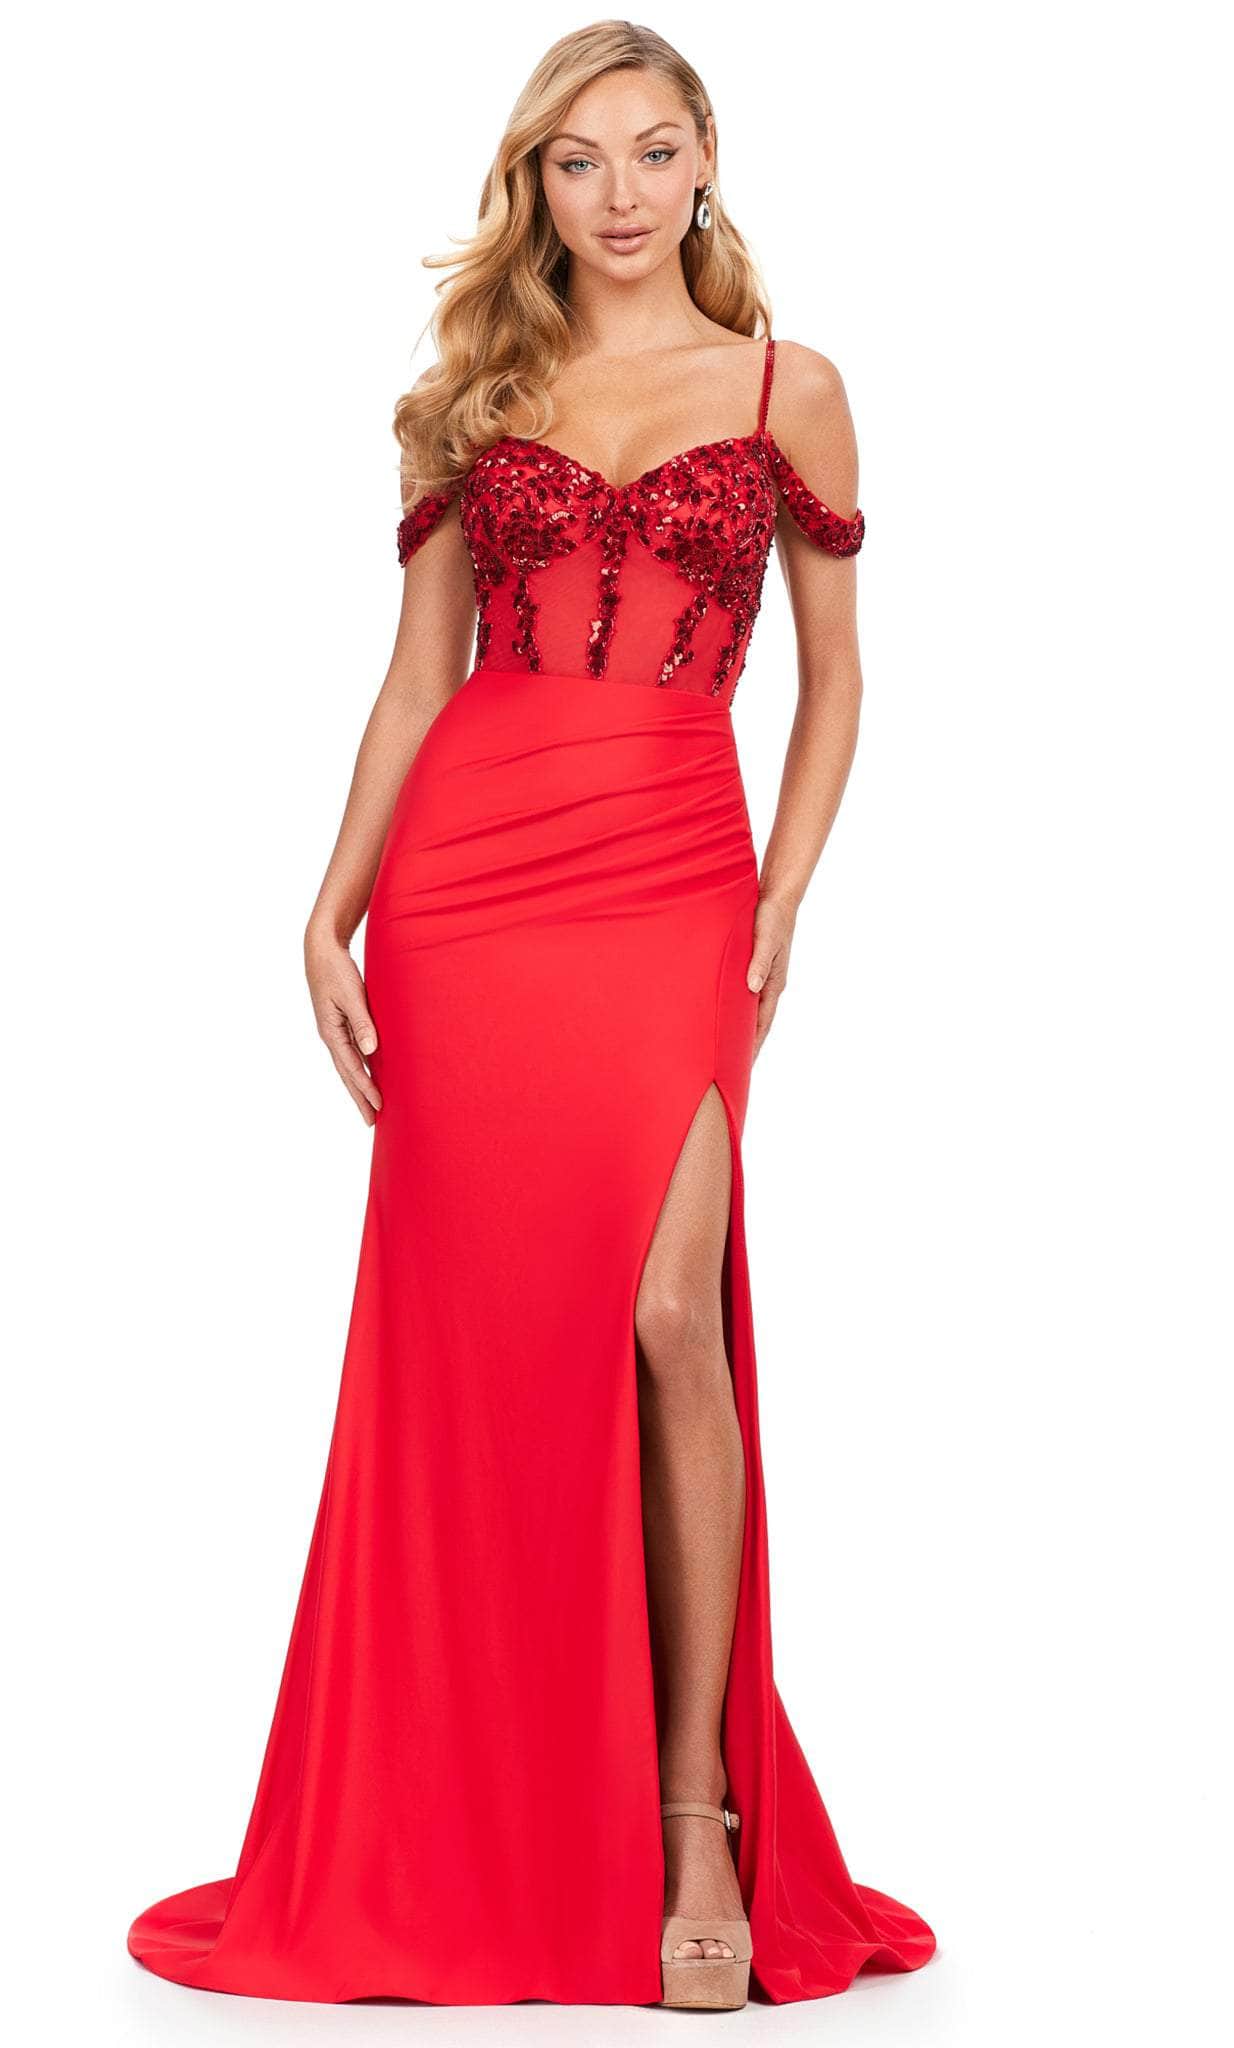 ashley lauren 11391 - corset dress